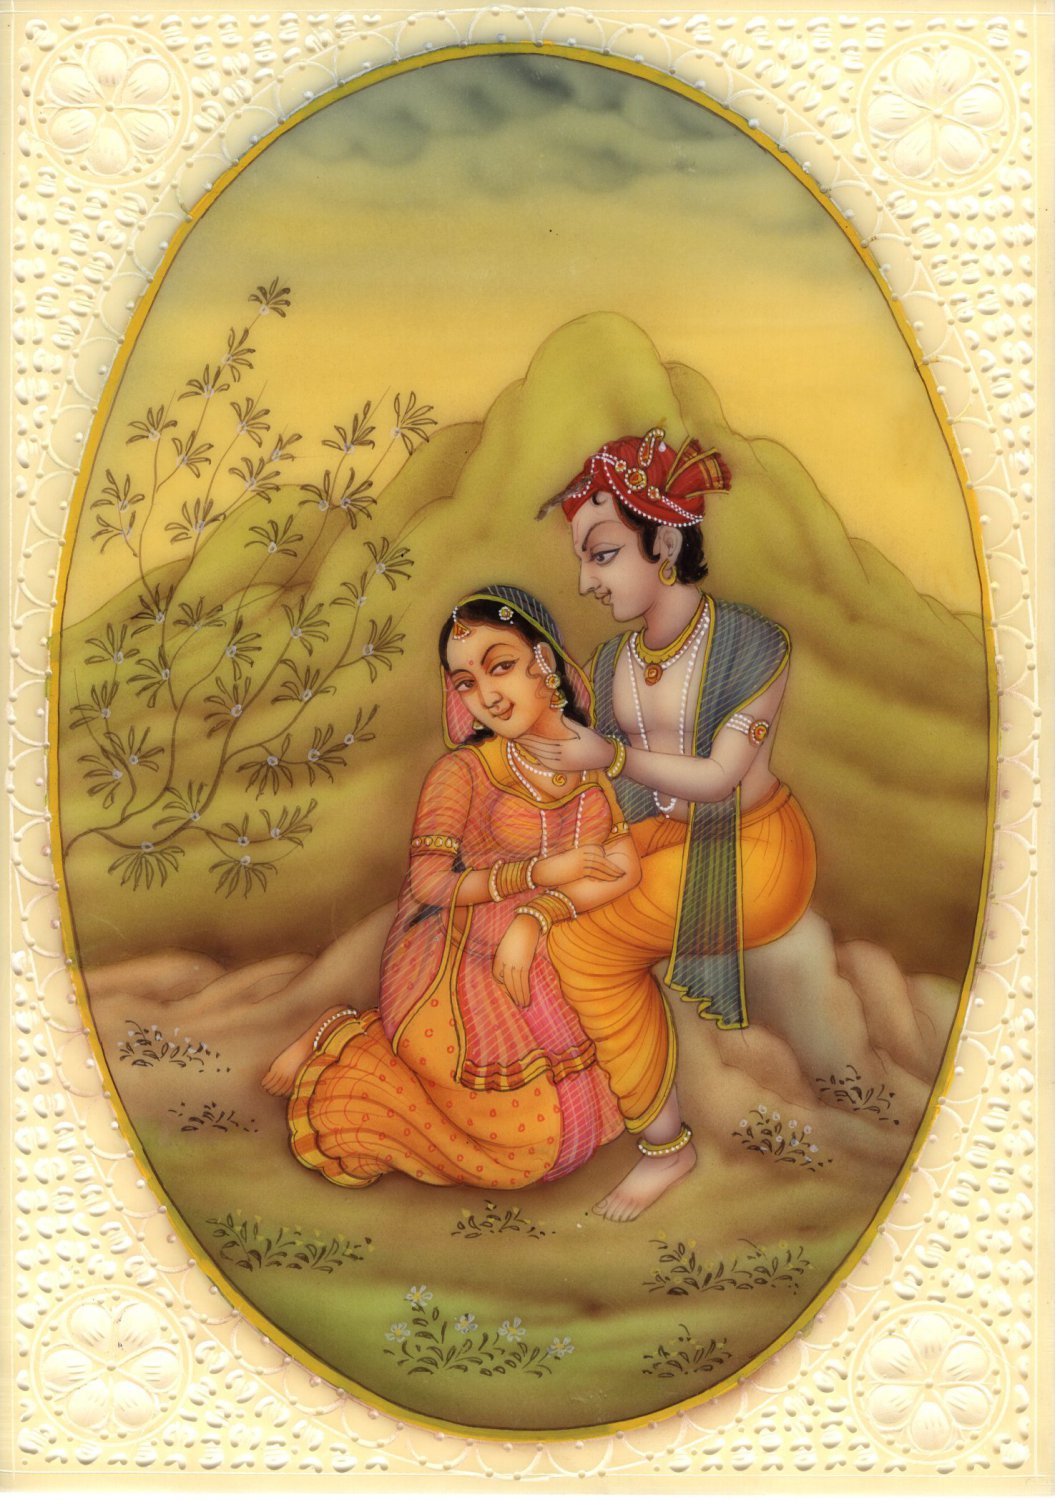 Krishna Radha Miniature Hindu Art Handmade Religious Ethnic Decor Folk Painting